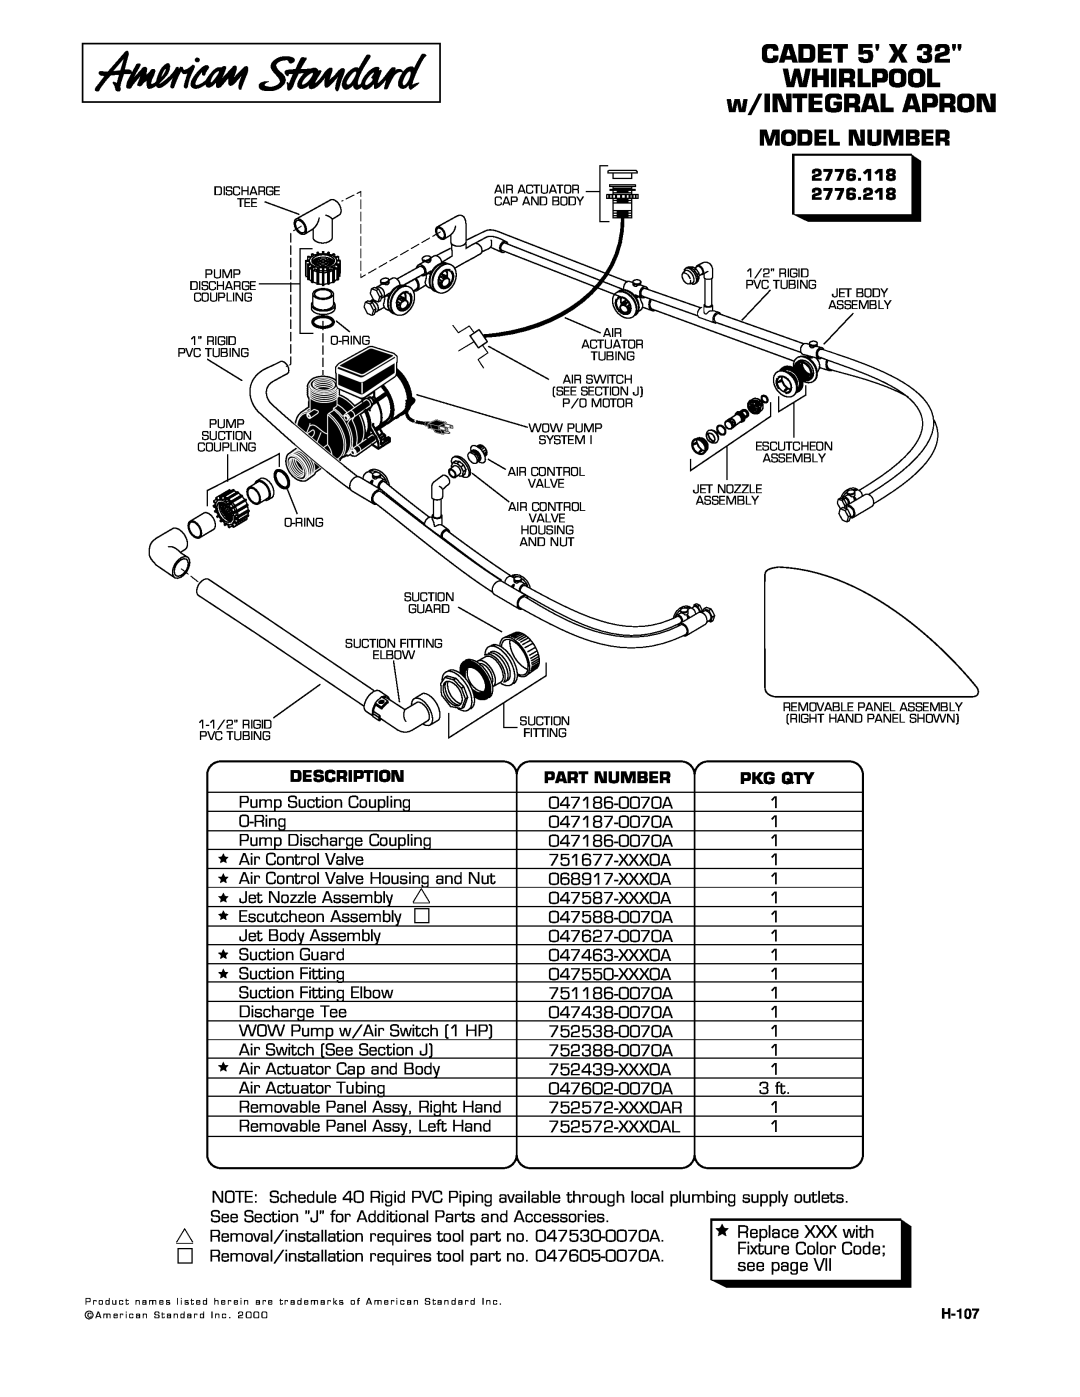 American Standard 2776.118 manual CADET 5 X WHIRLPOOL w/INTEGRAL APRON, Model Number, Description, Part Number, Pkg Qty 